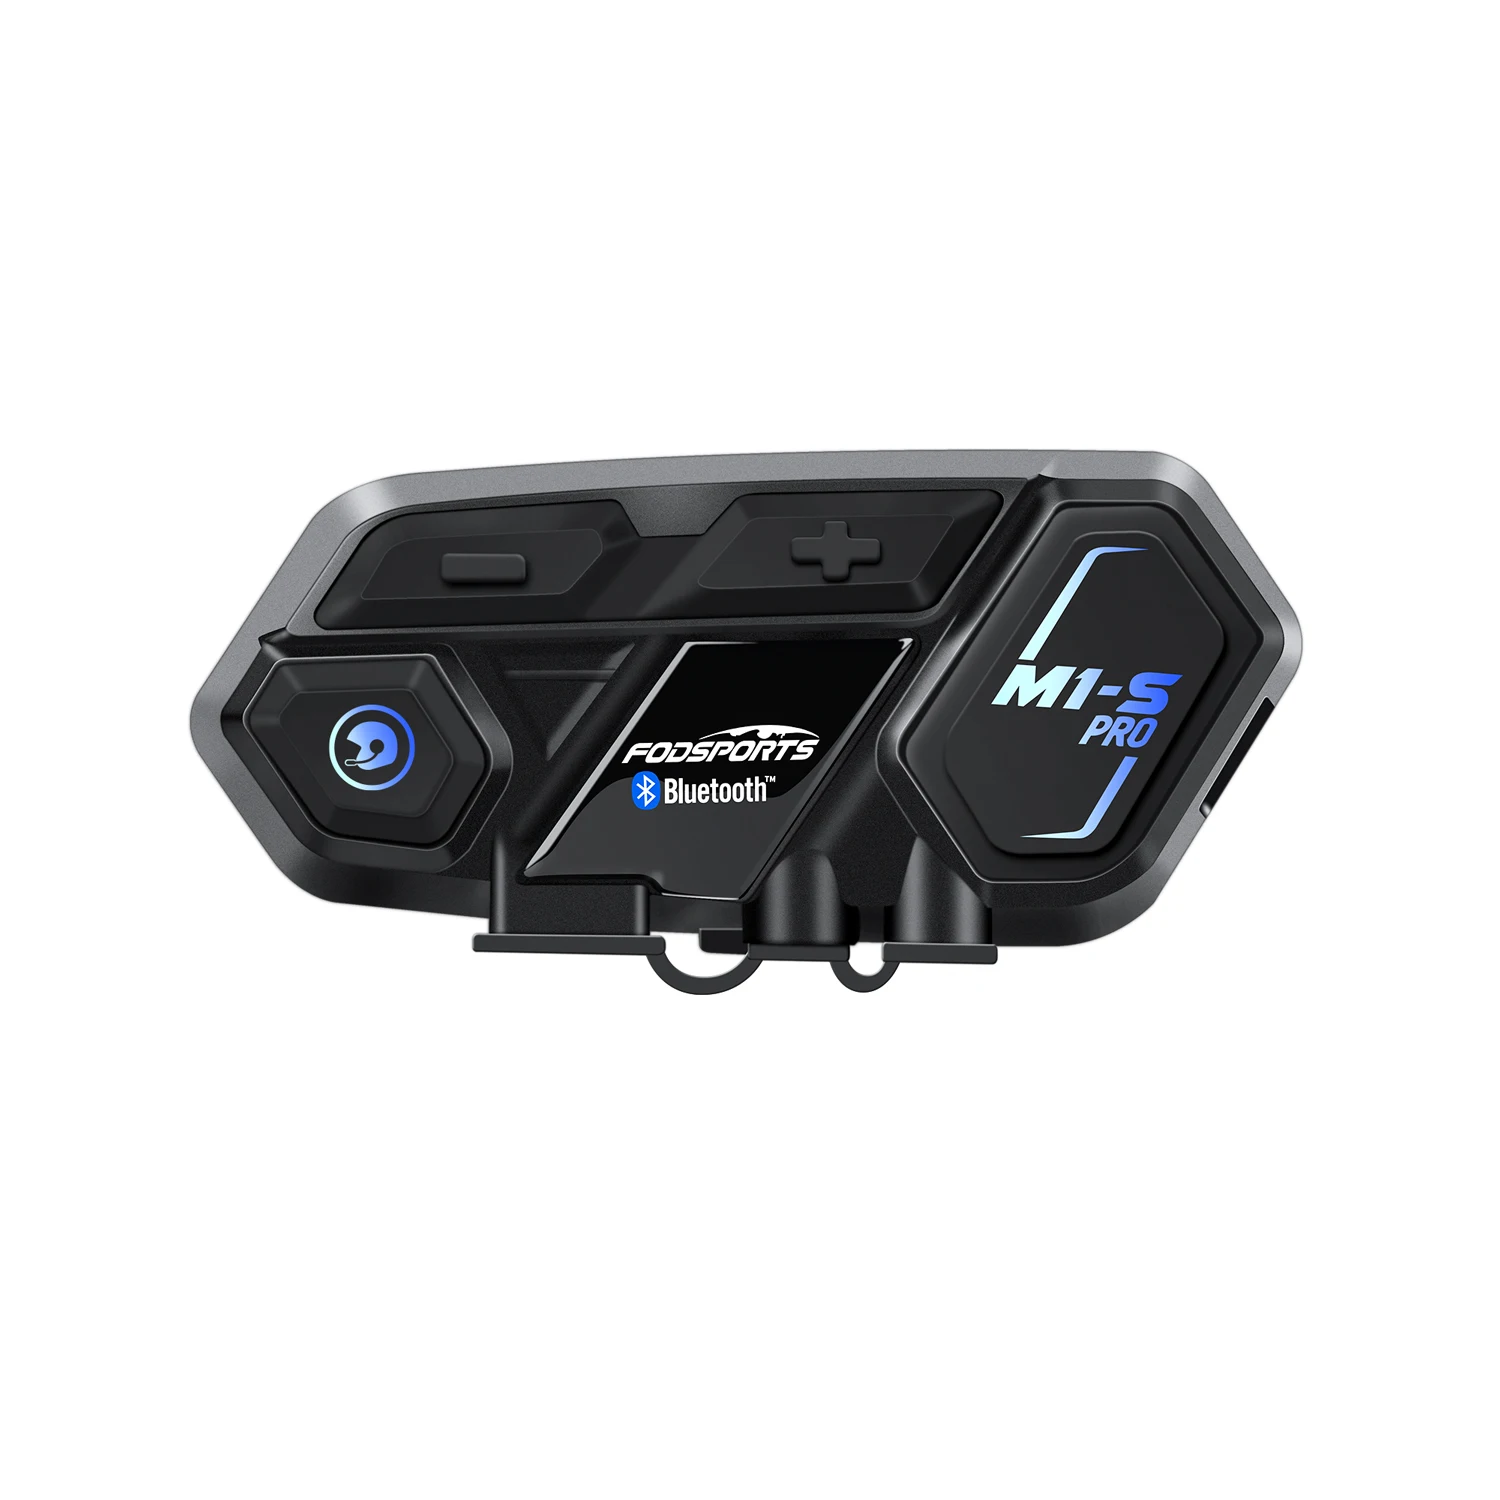 

Fodsports M1-S PRO 2000m 8 riders Full Duplex bluetooth 5.0 motorcycle Helmet intercom headset